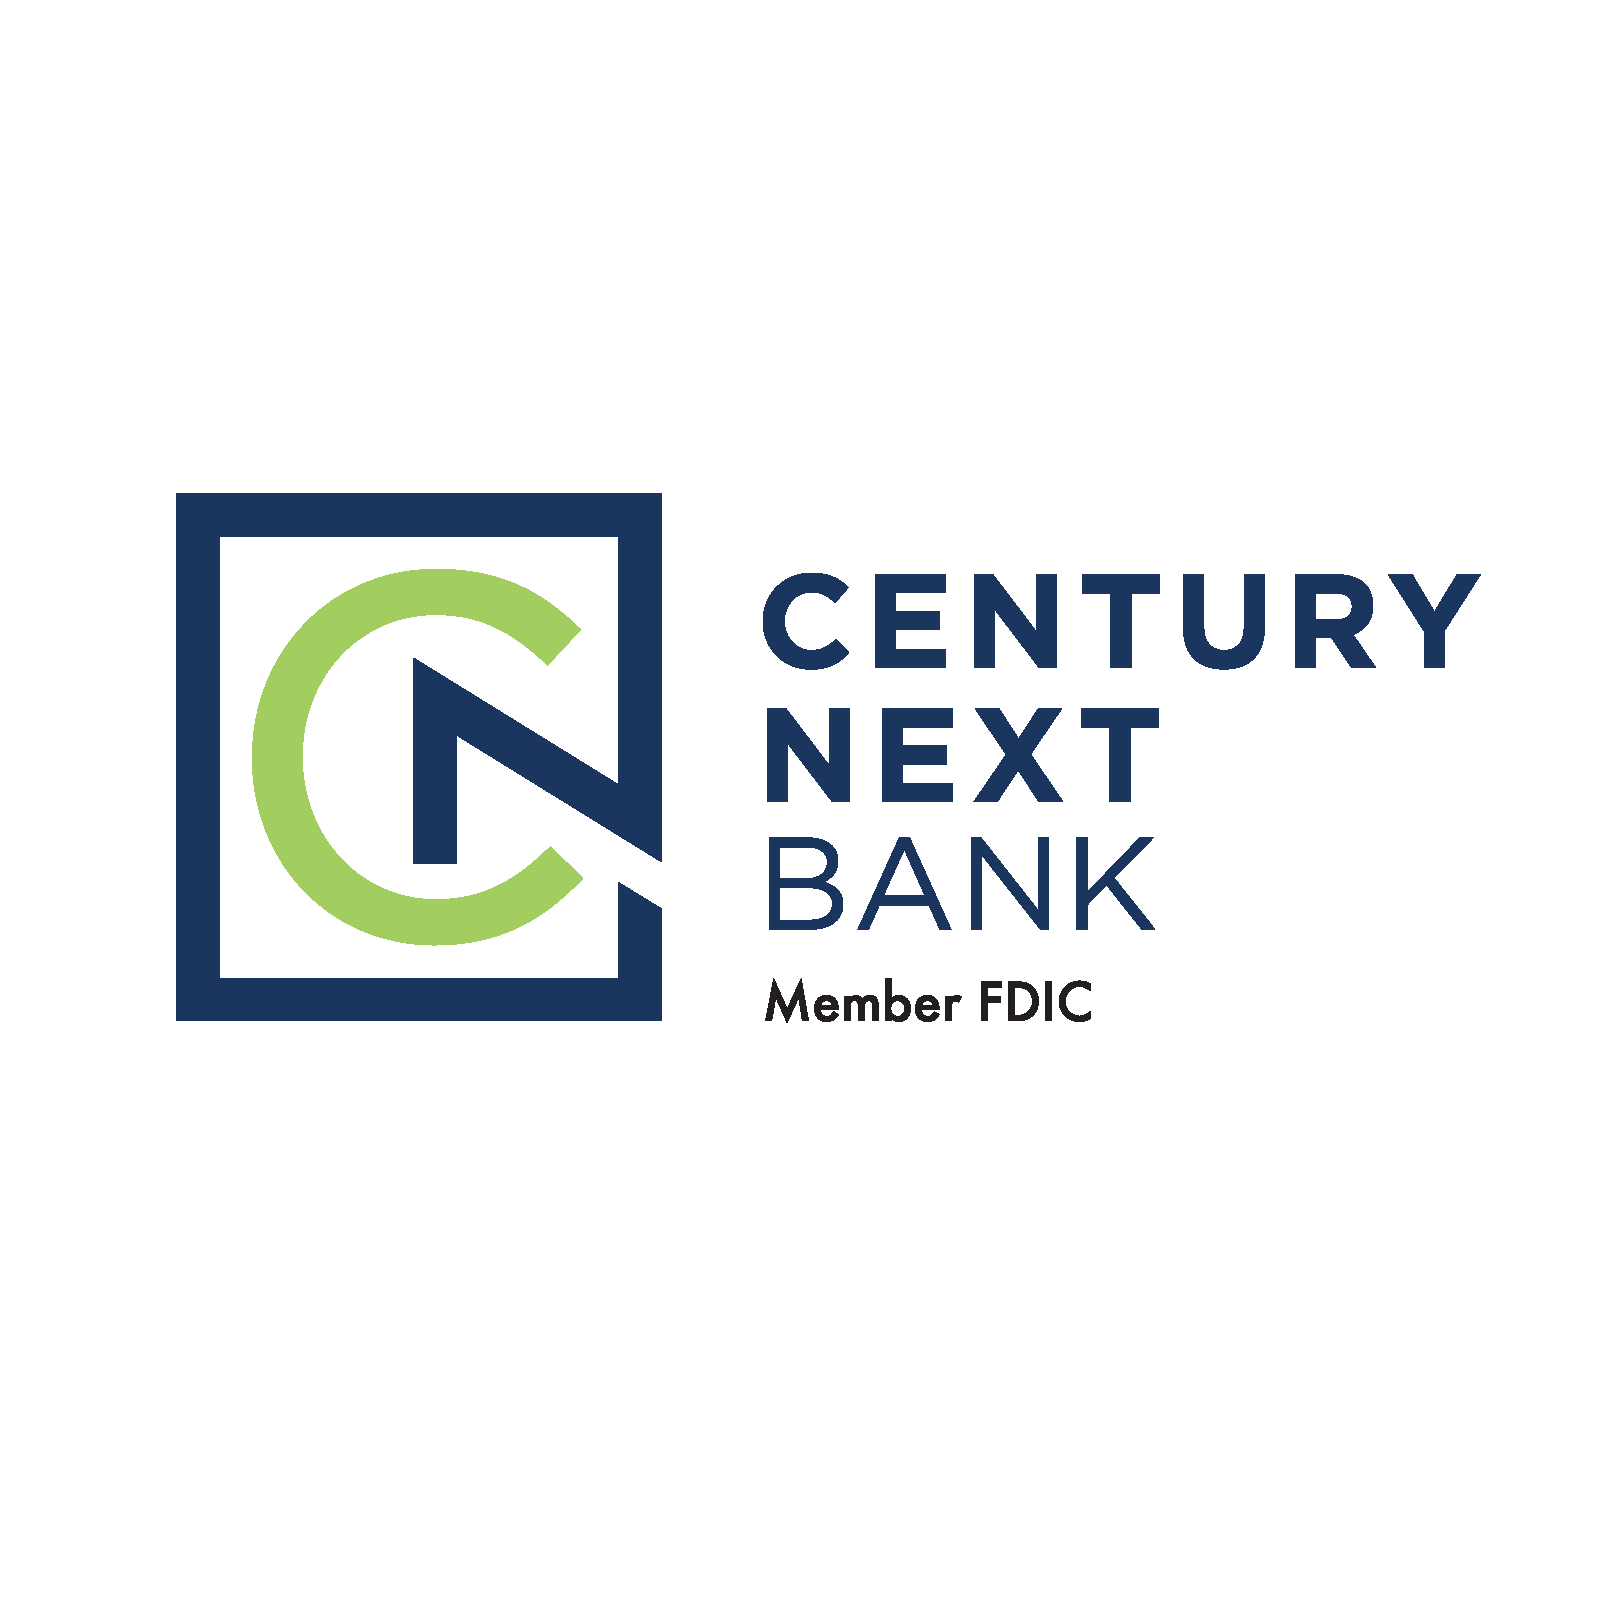 A. Century Next Bank (Tier 3)